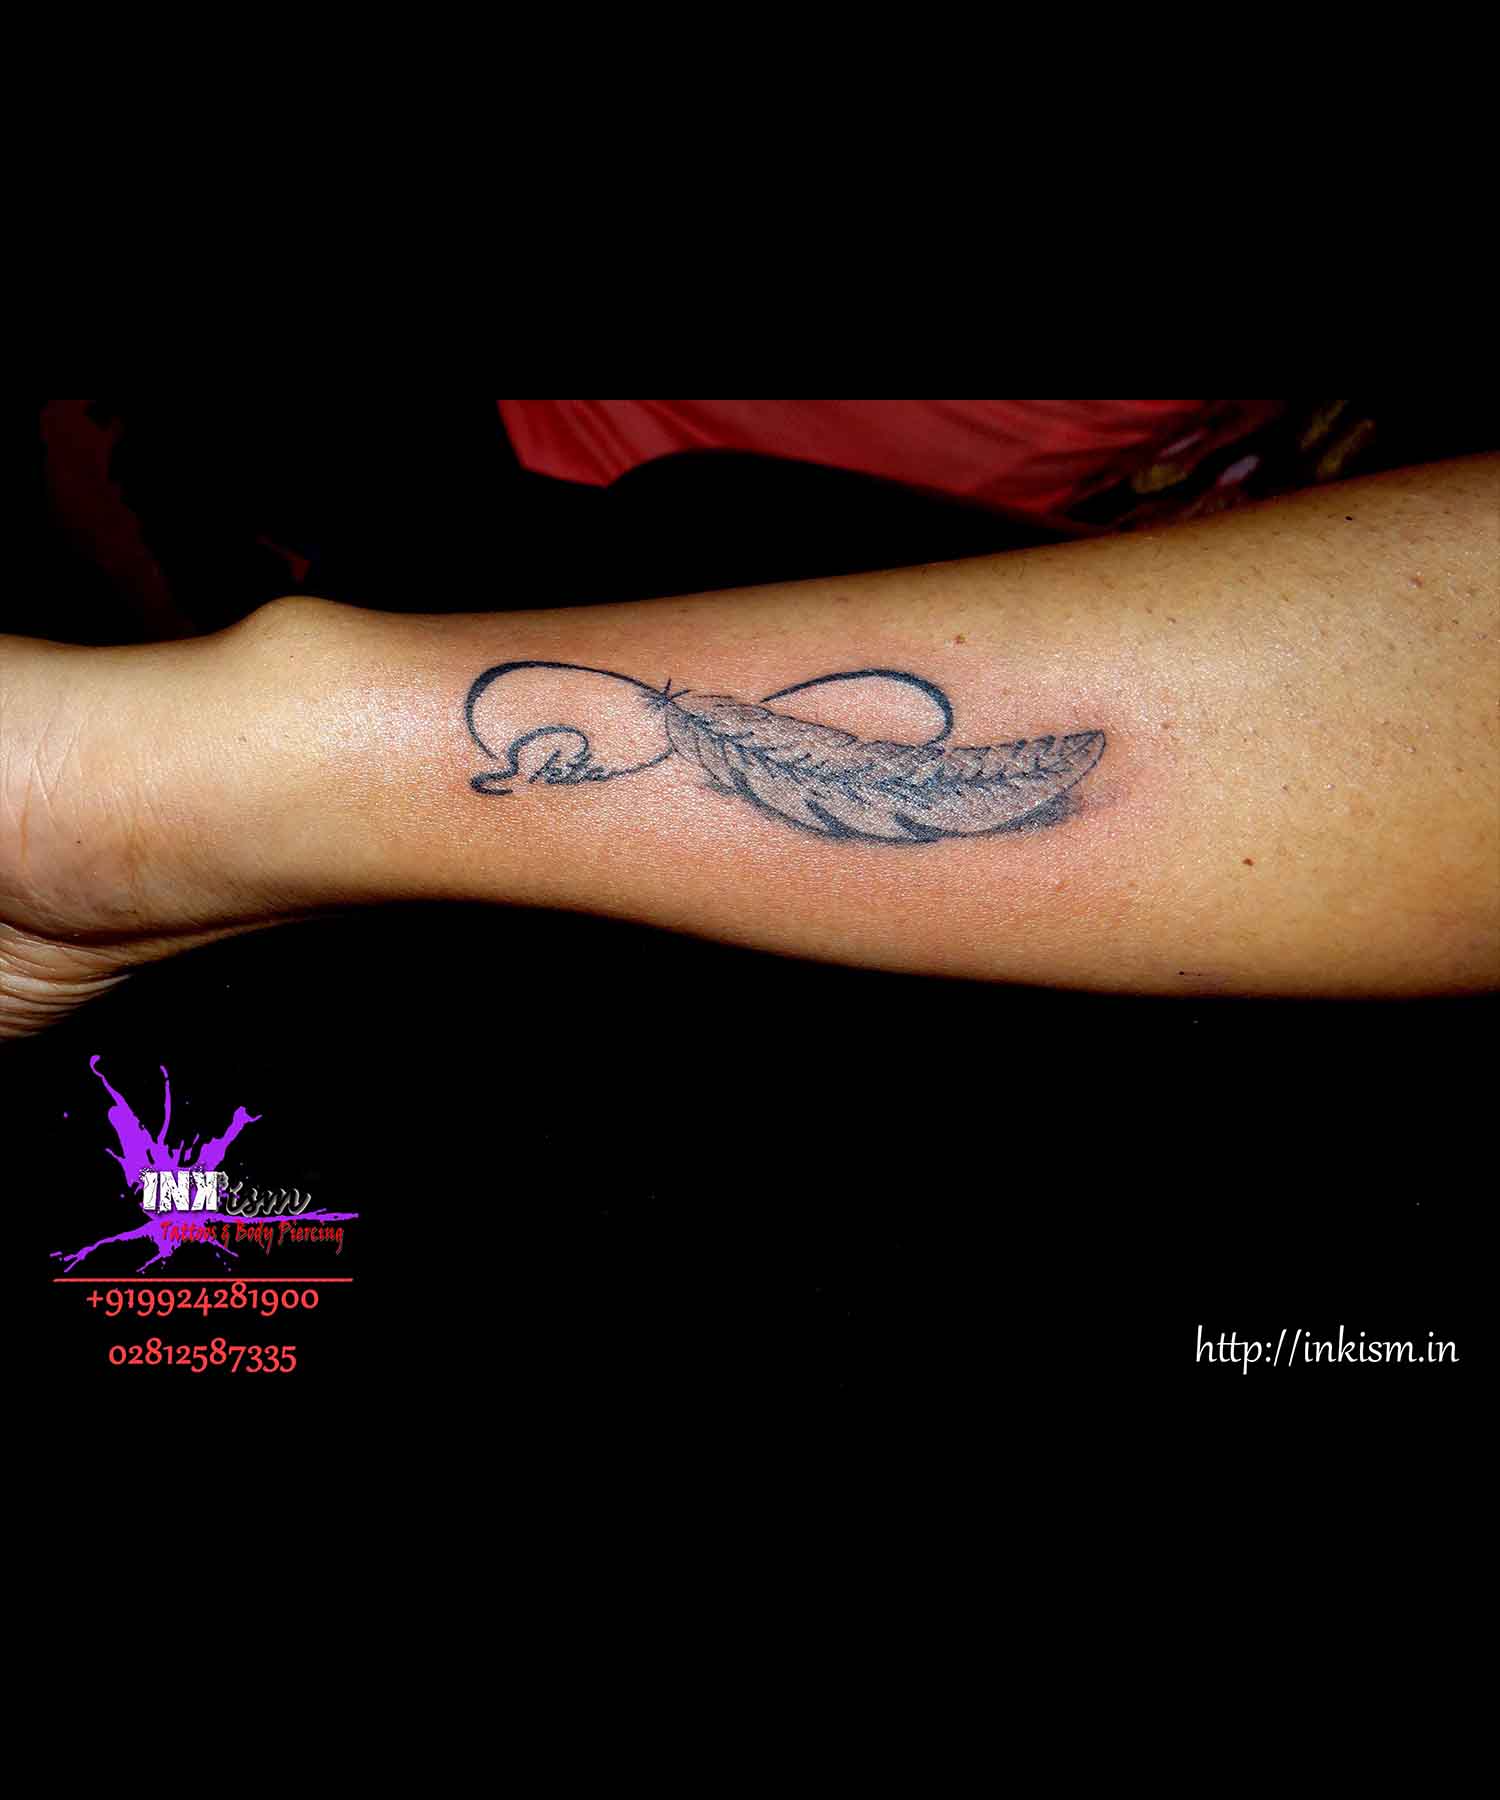 Infinity with feather tattoo, Infinity tattoo, Feather Tattoo, Calligraphy name Tattoo, Name Tattoo, Inkism tattoo and body piercing rajkot gujarat